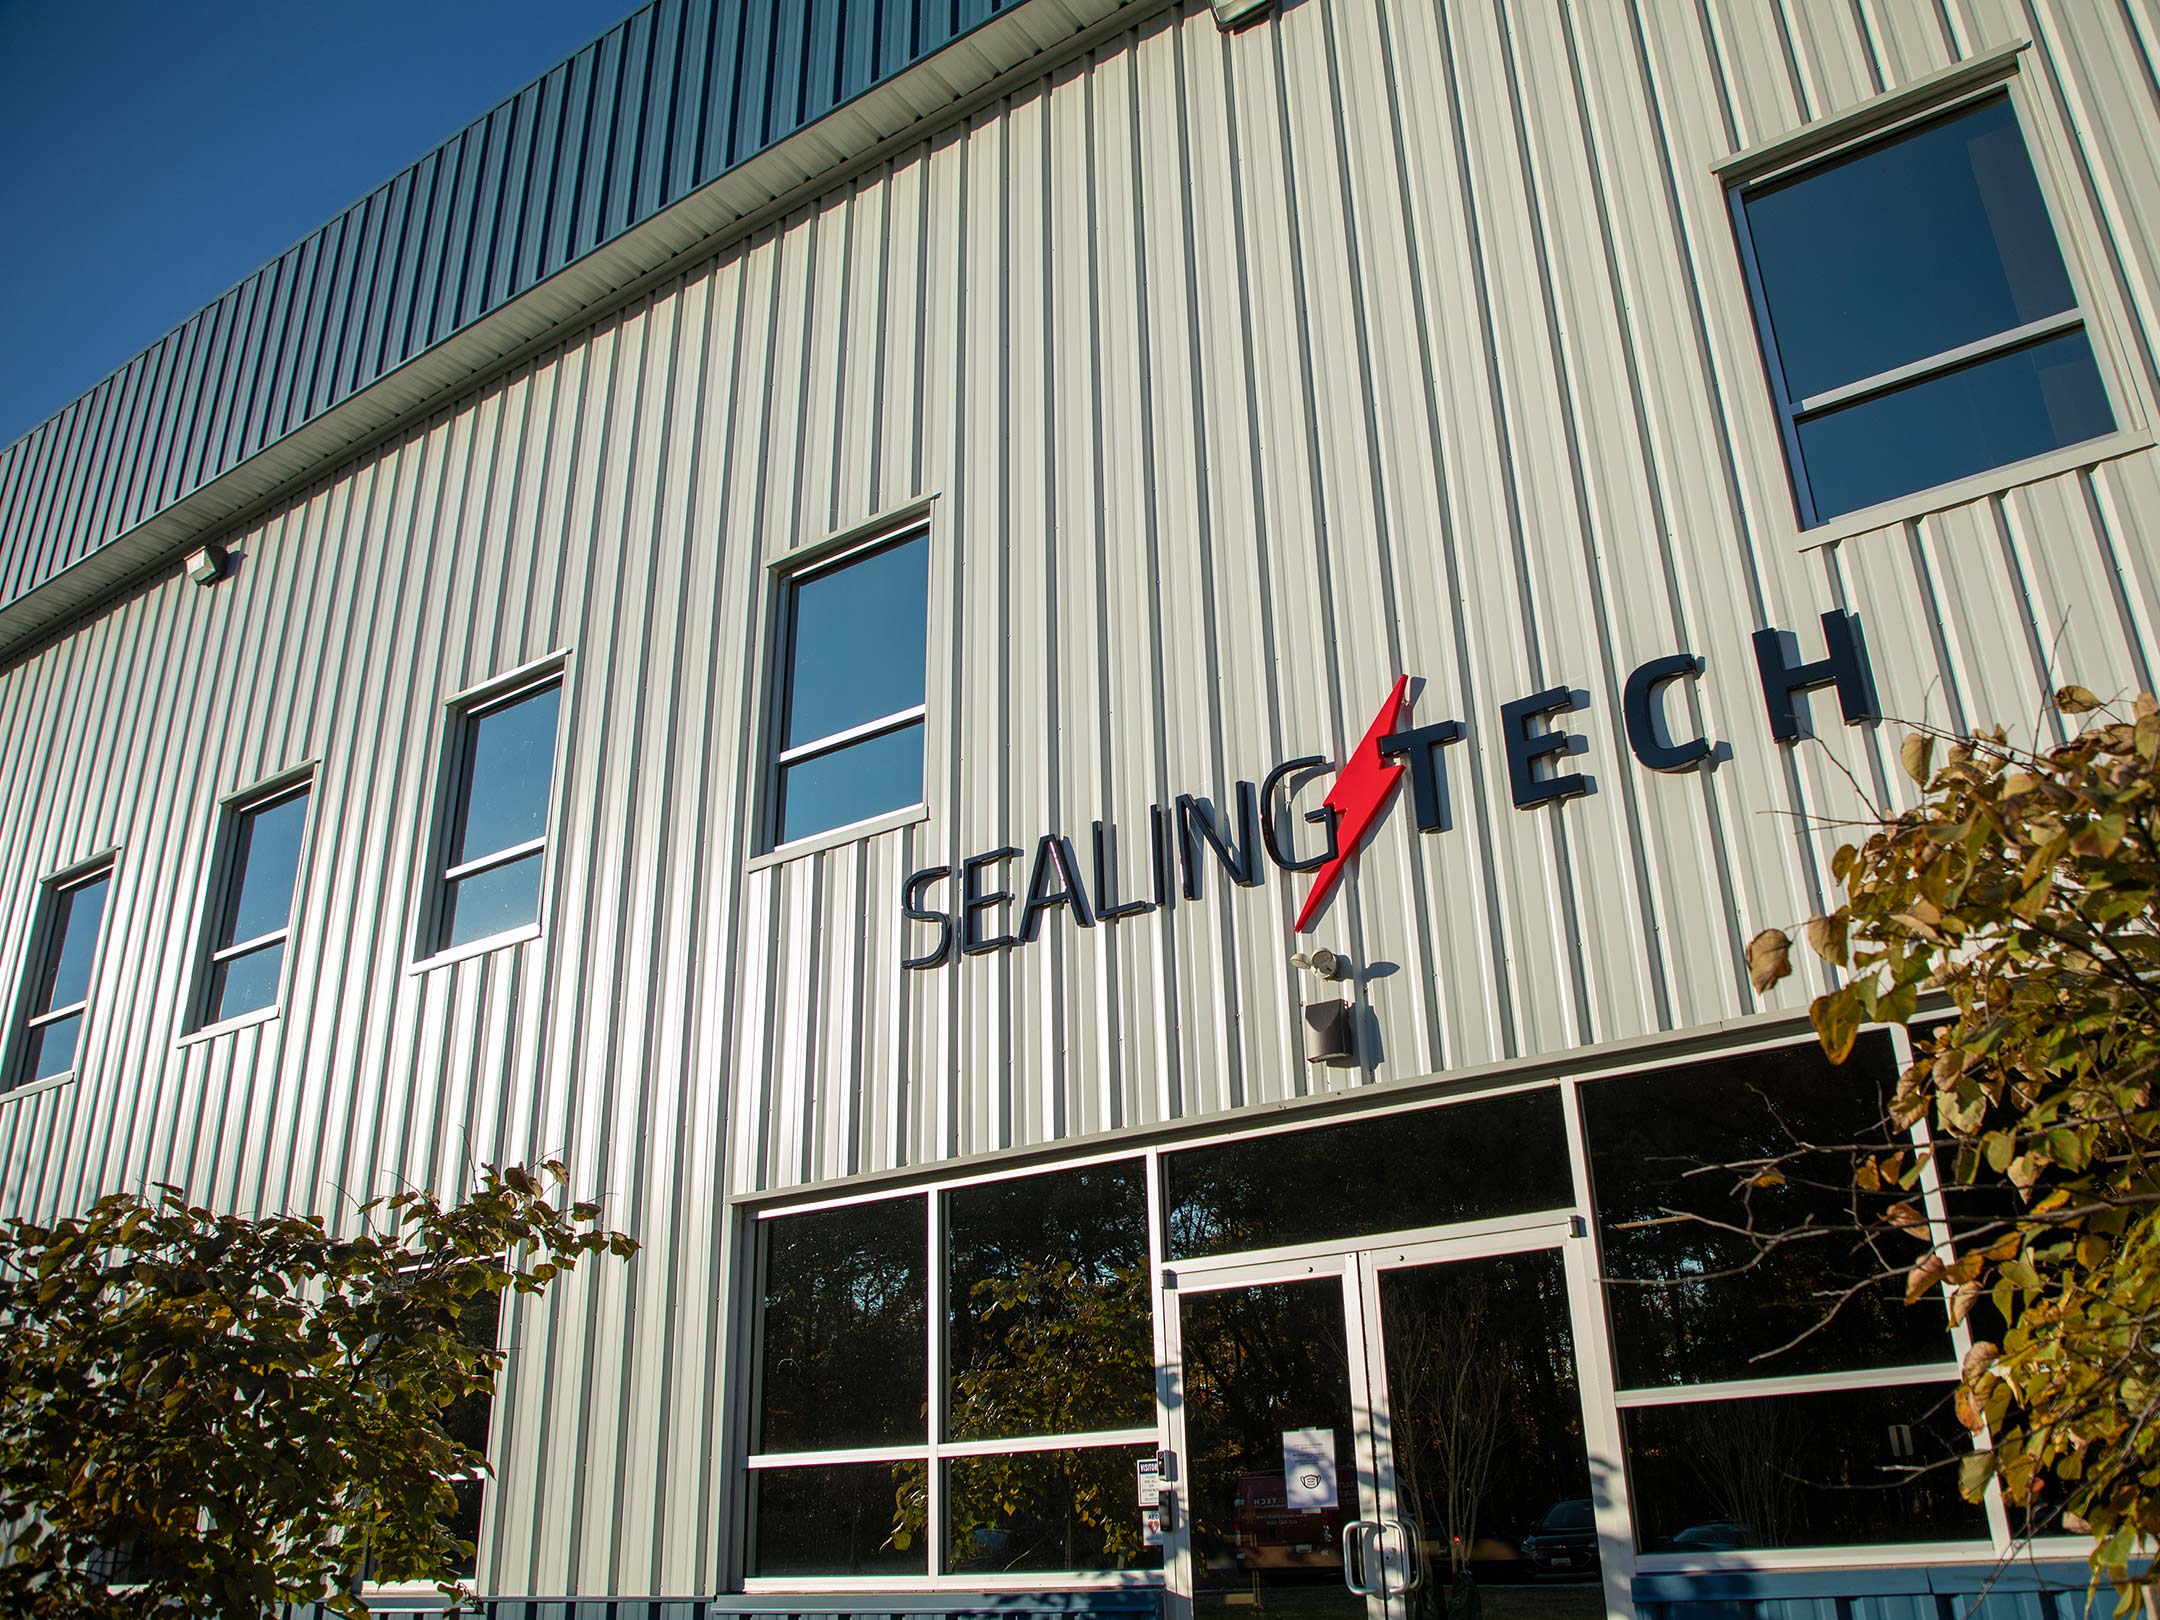 SealingTech Enterprise Modernization Facility